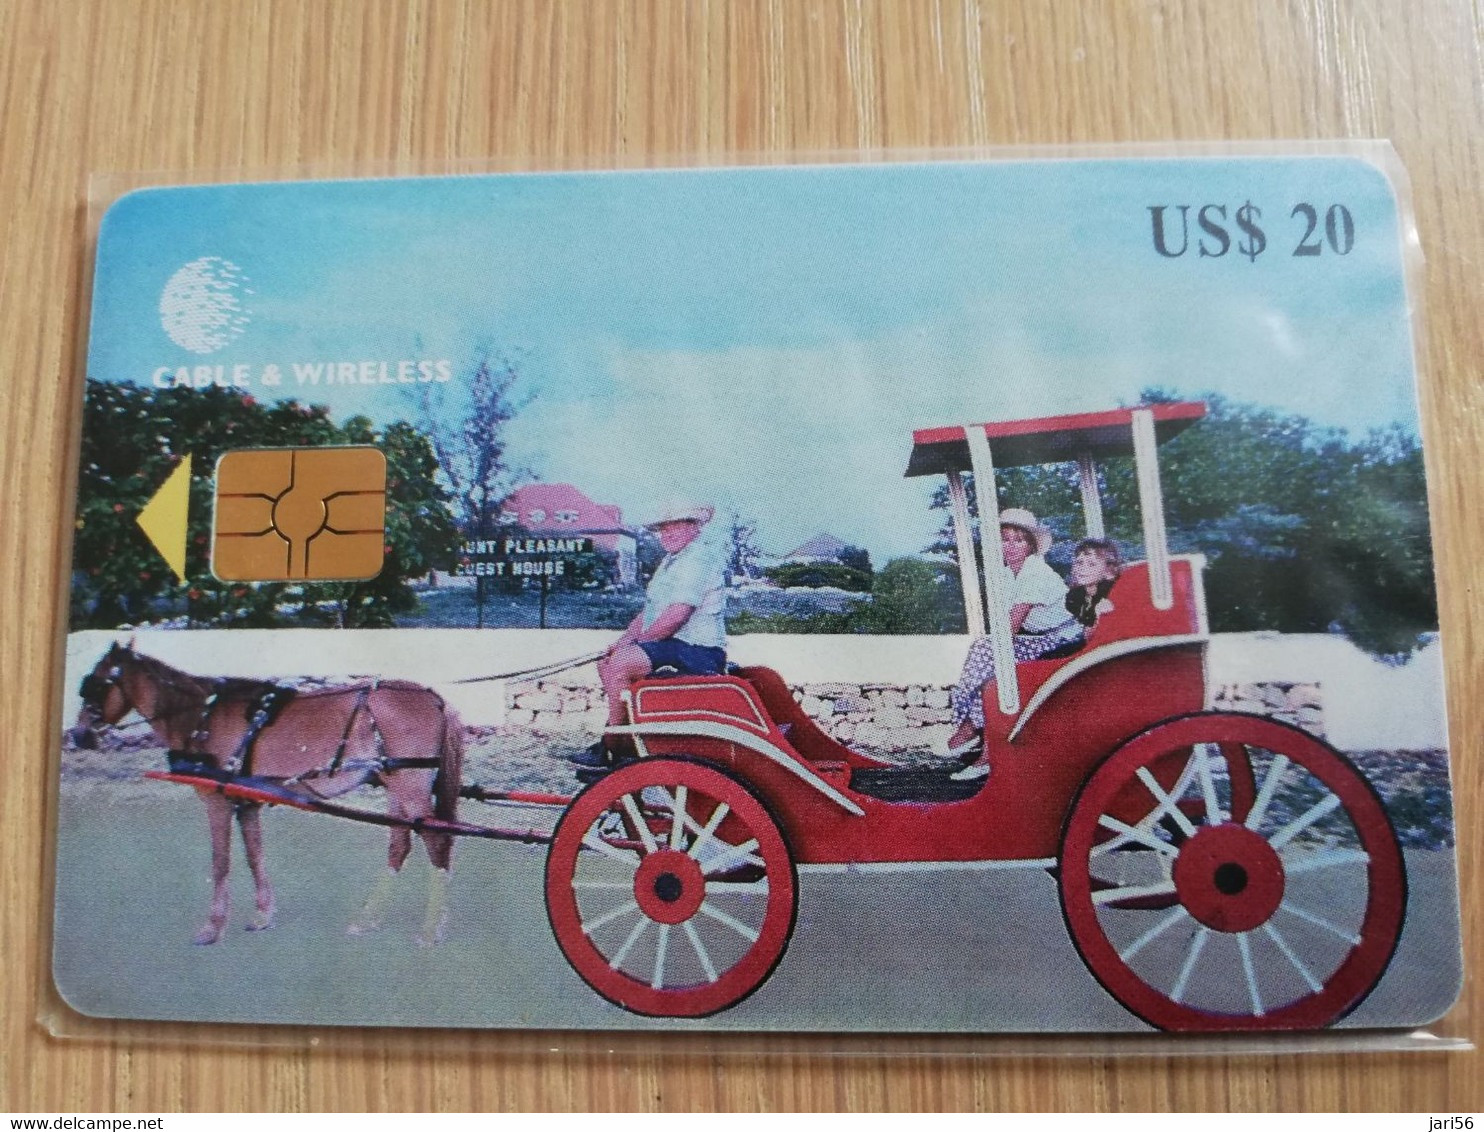 TURKS & CAICOS ISLANDS $ 20,00  CHIP  CARD  HORSE CART WITH LOGO     T&C -C3  GEM6     Fine Used  Card  **3317** - Turcas Y Caicos (Islas)